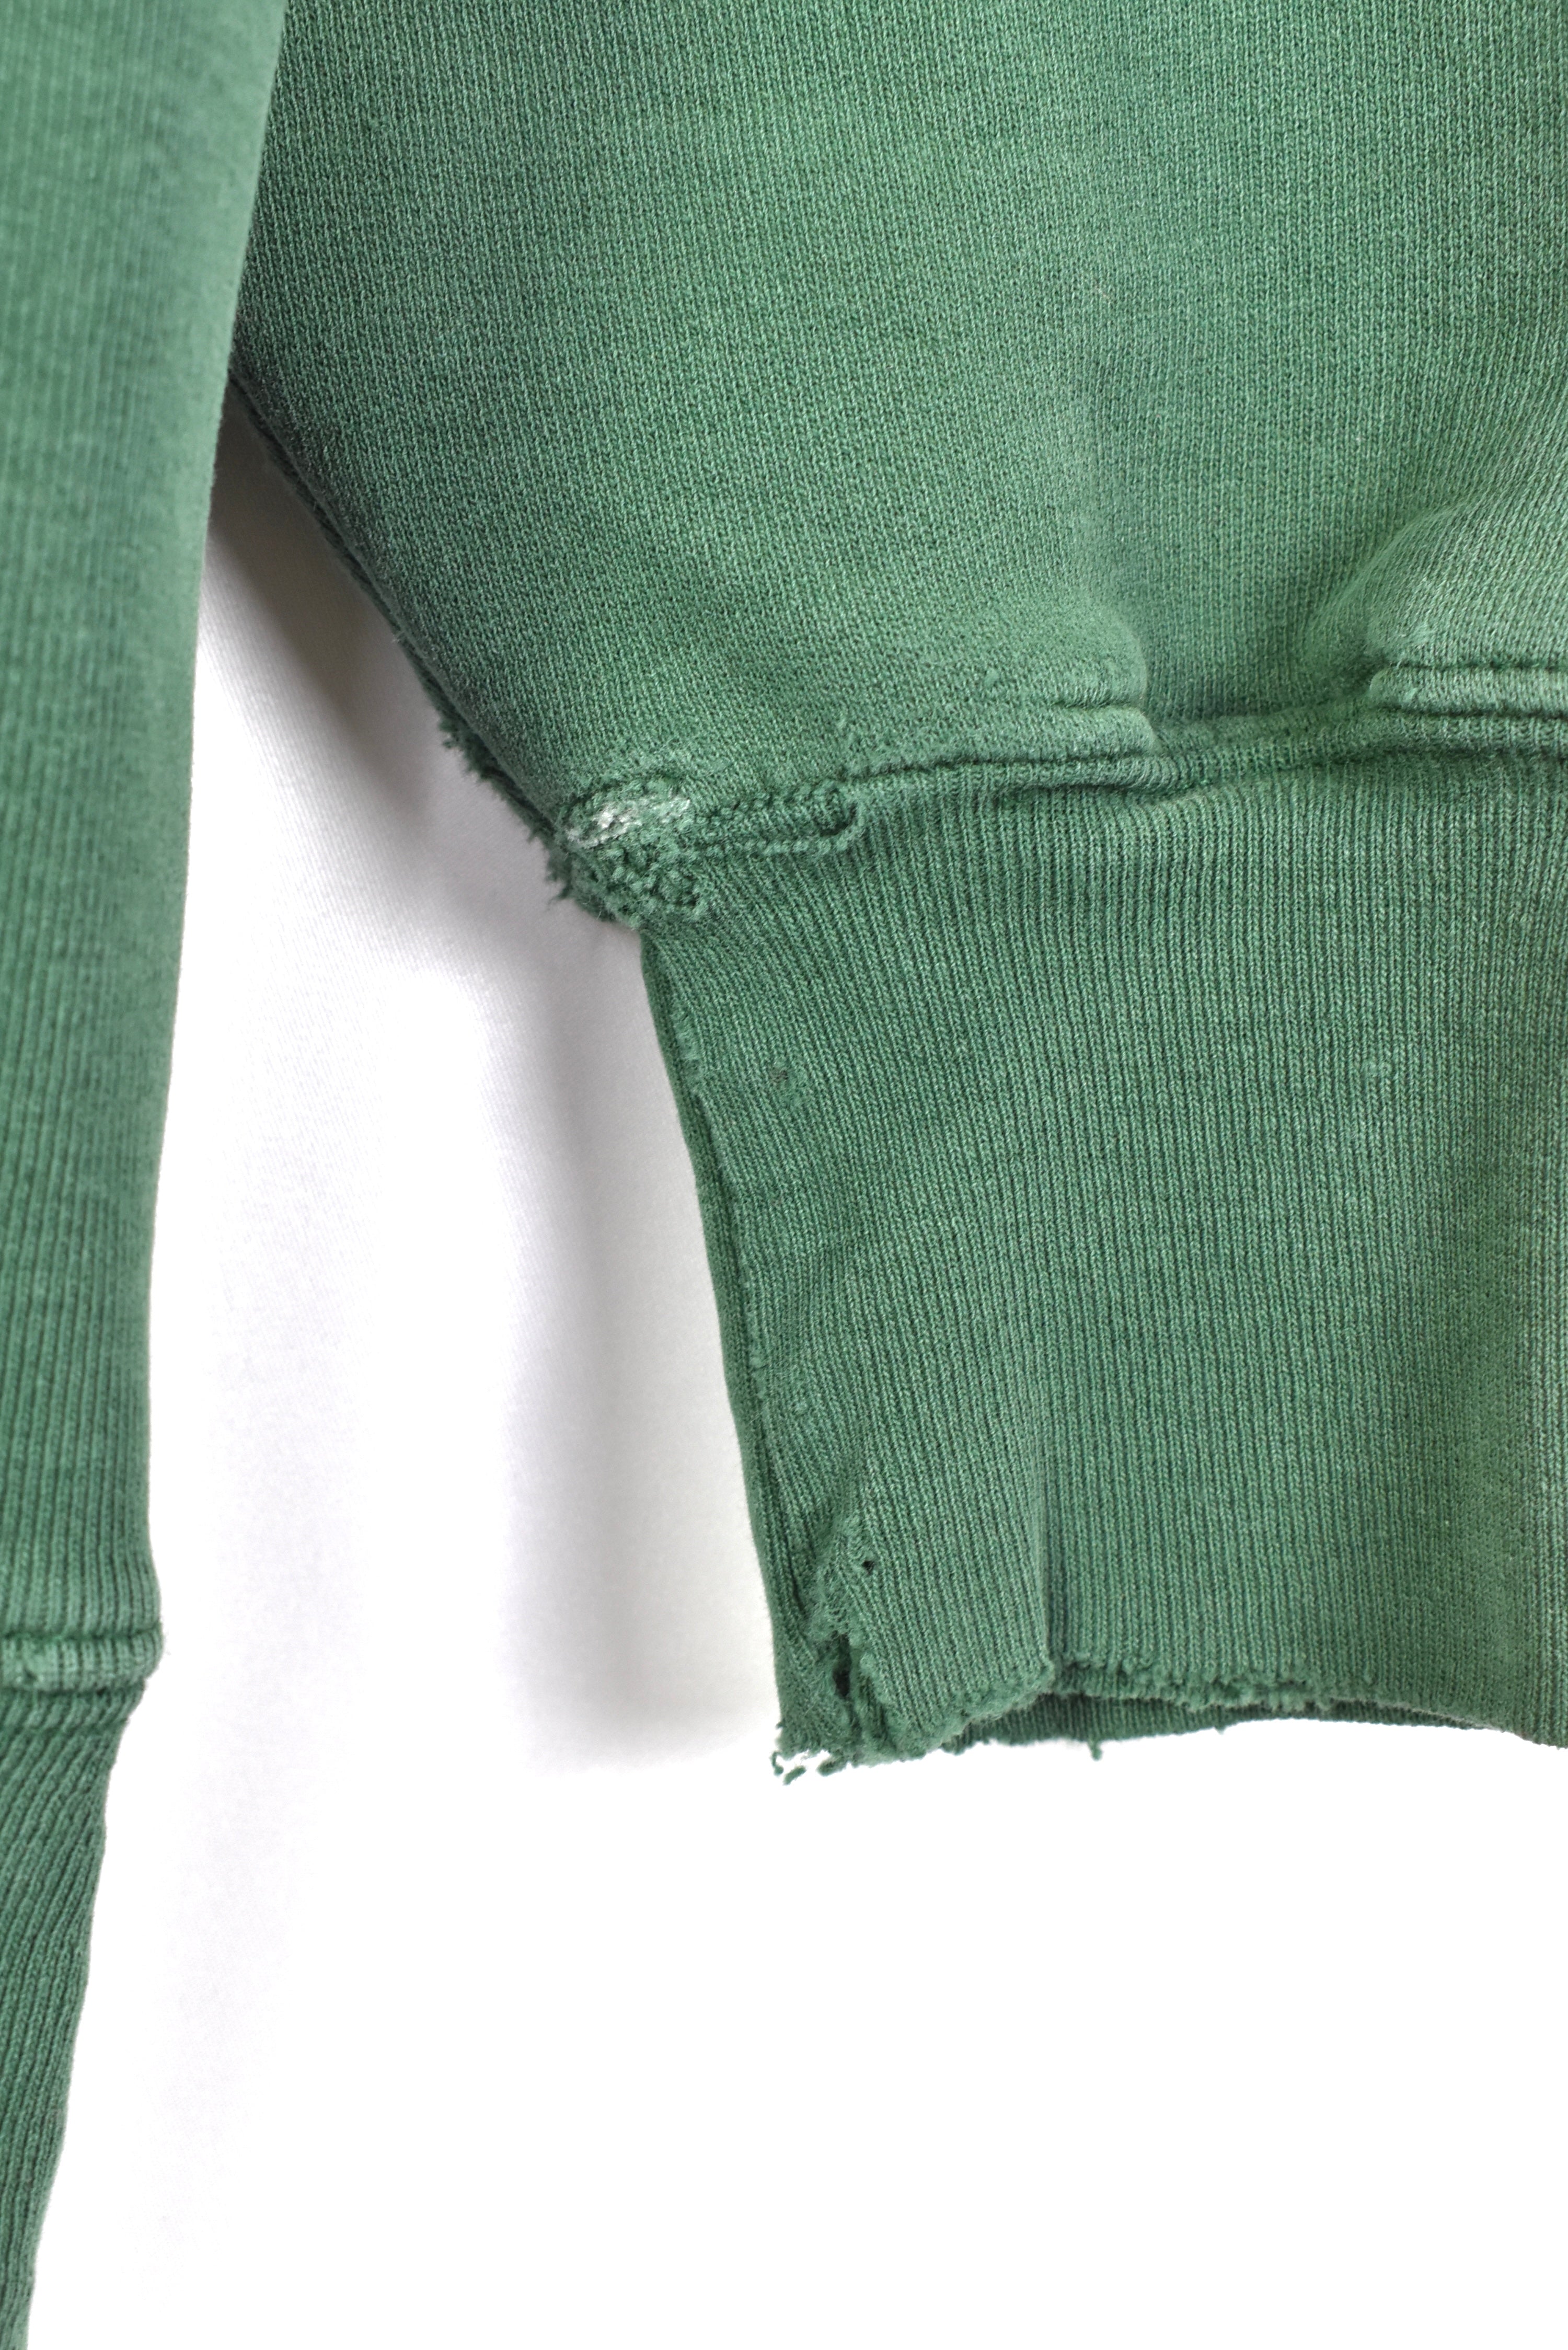 Vintage wright state university embroidered green sweatshirt | medium COLLEGE